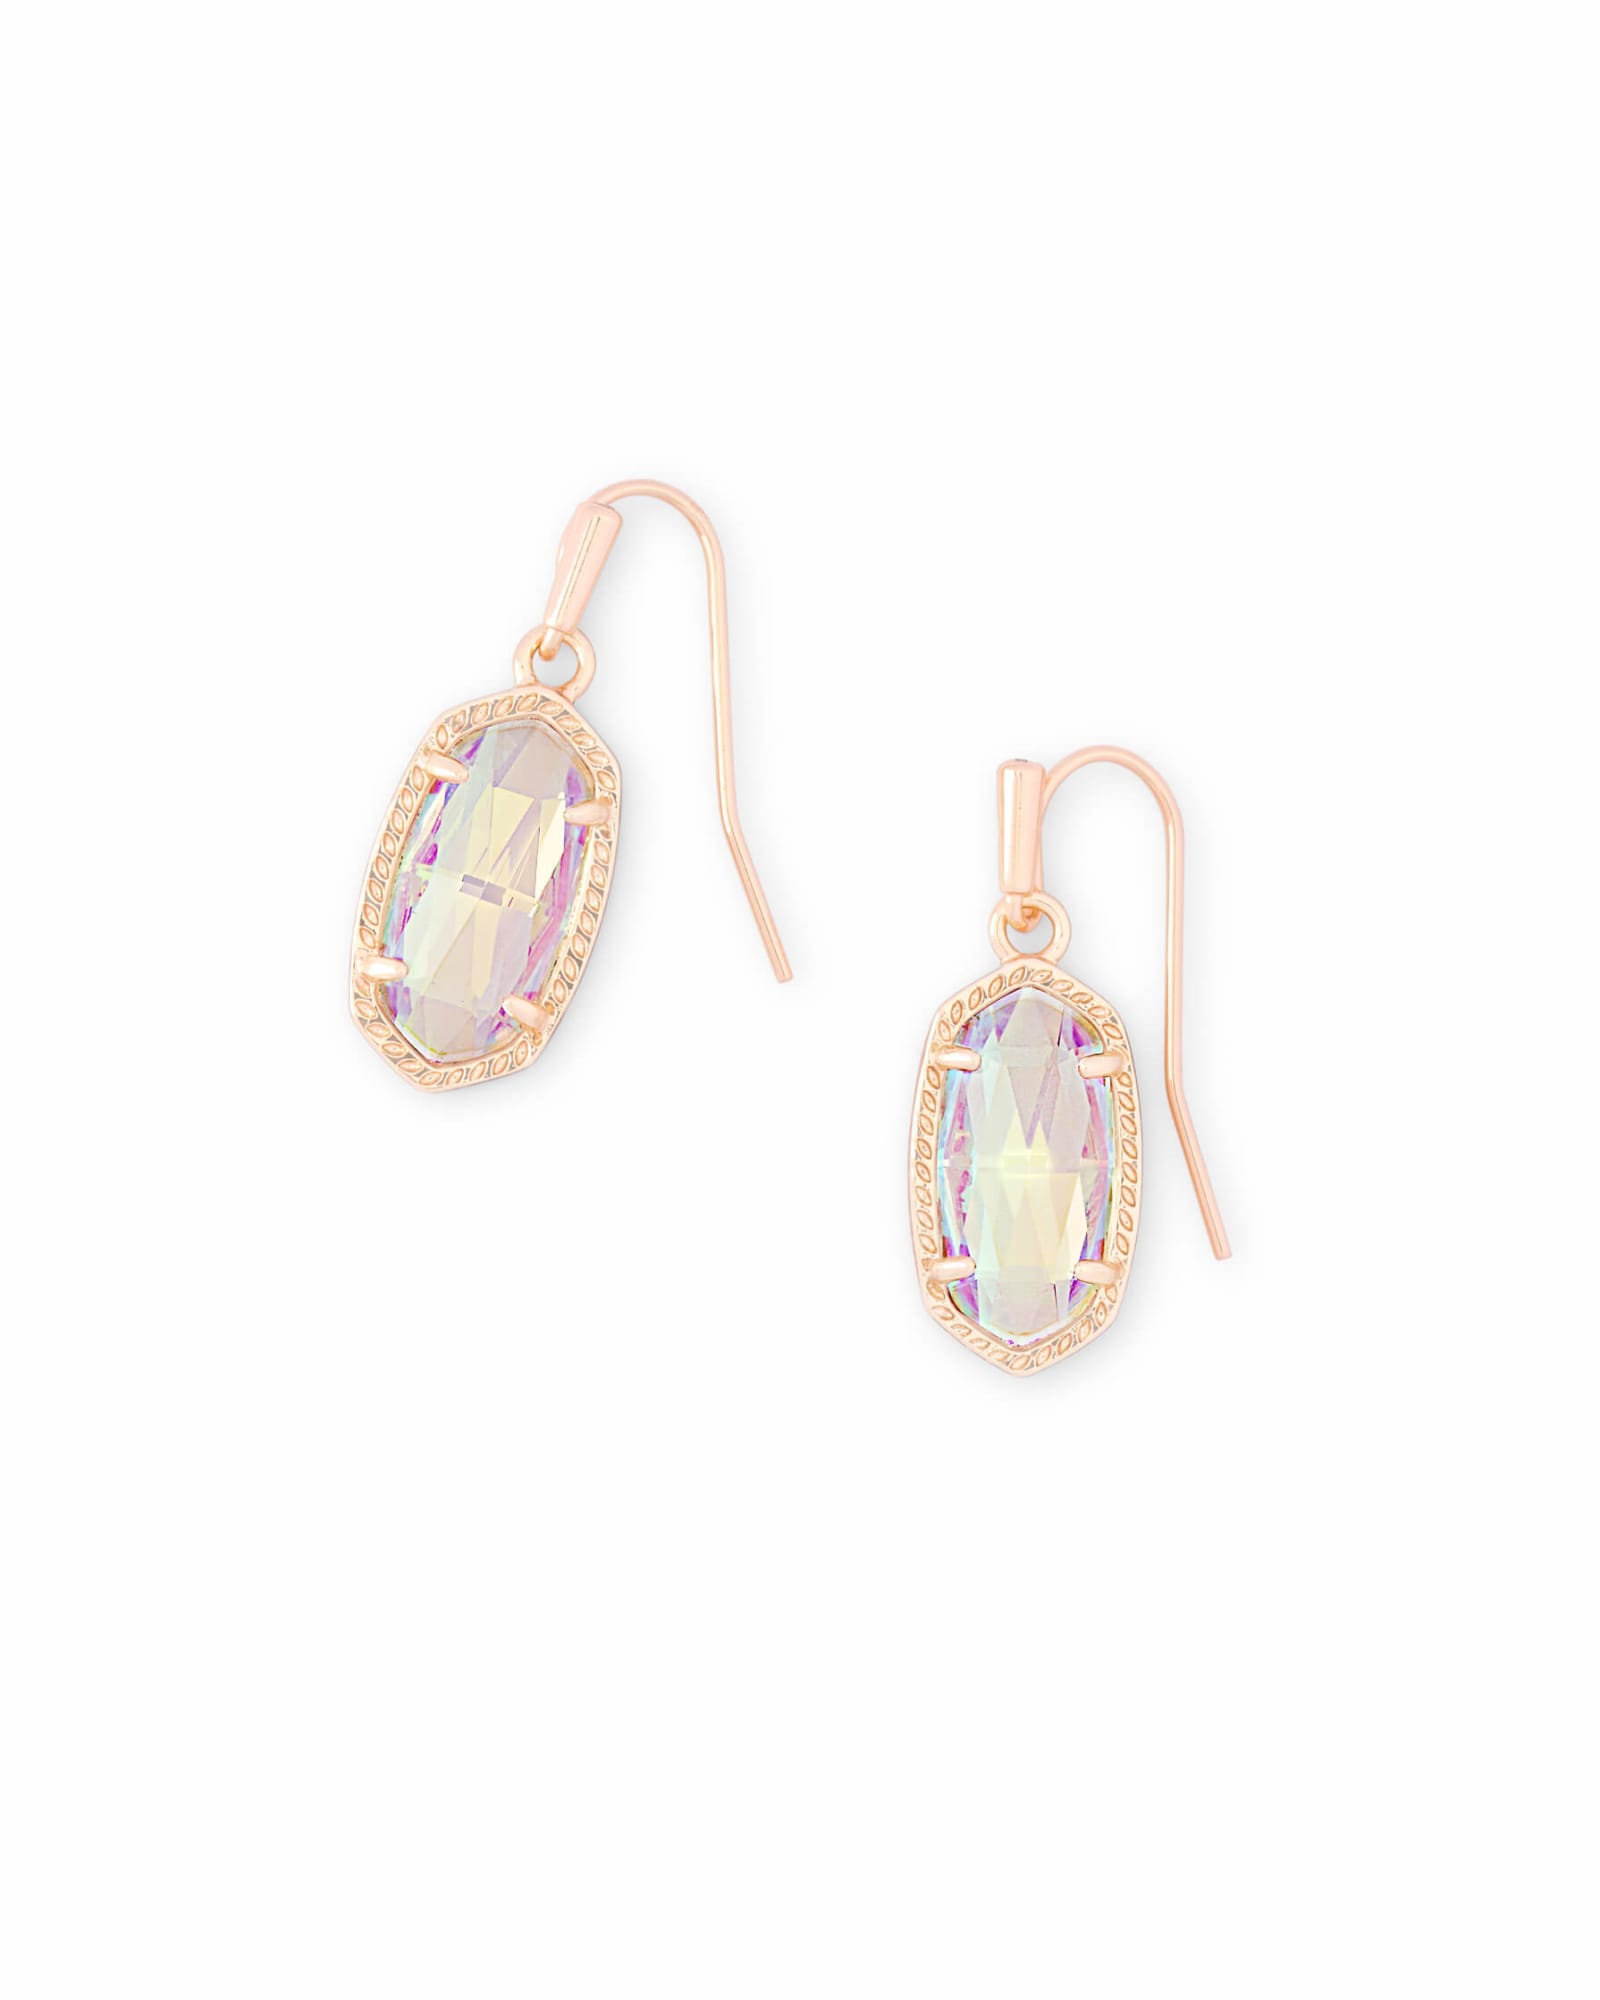 Kendra Scott Lee Rose Gold Drop Earrings in Dichroic | Glass